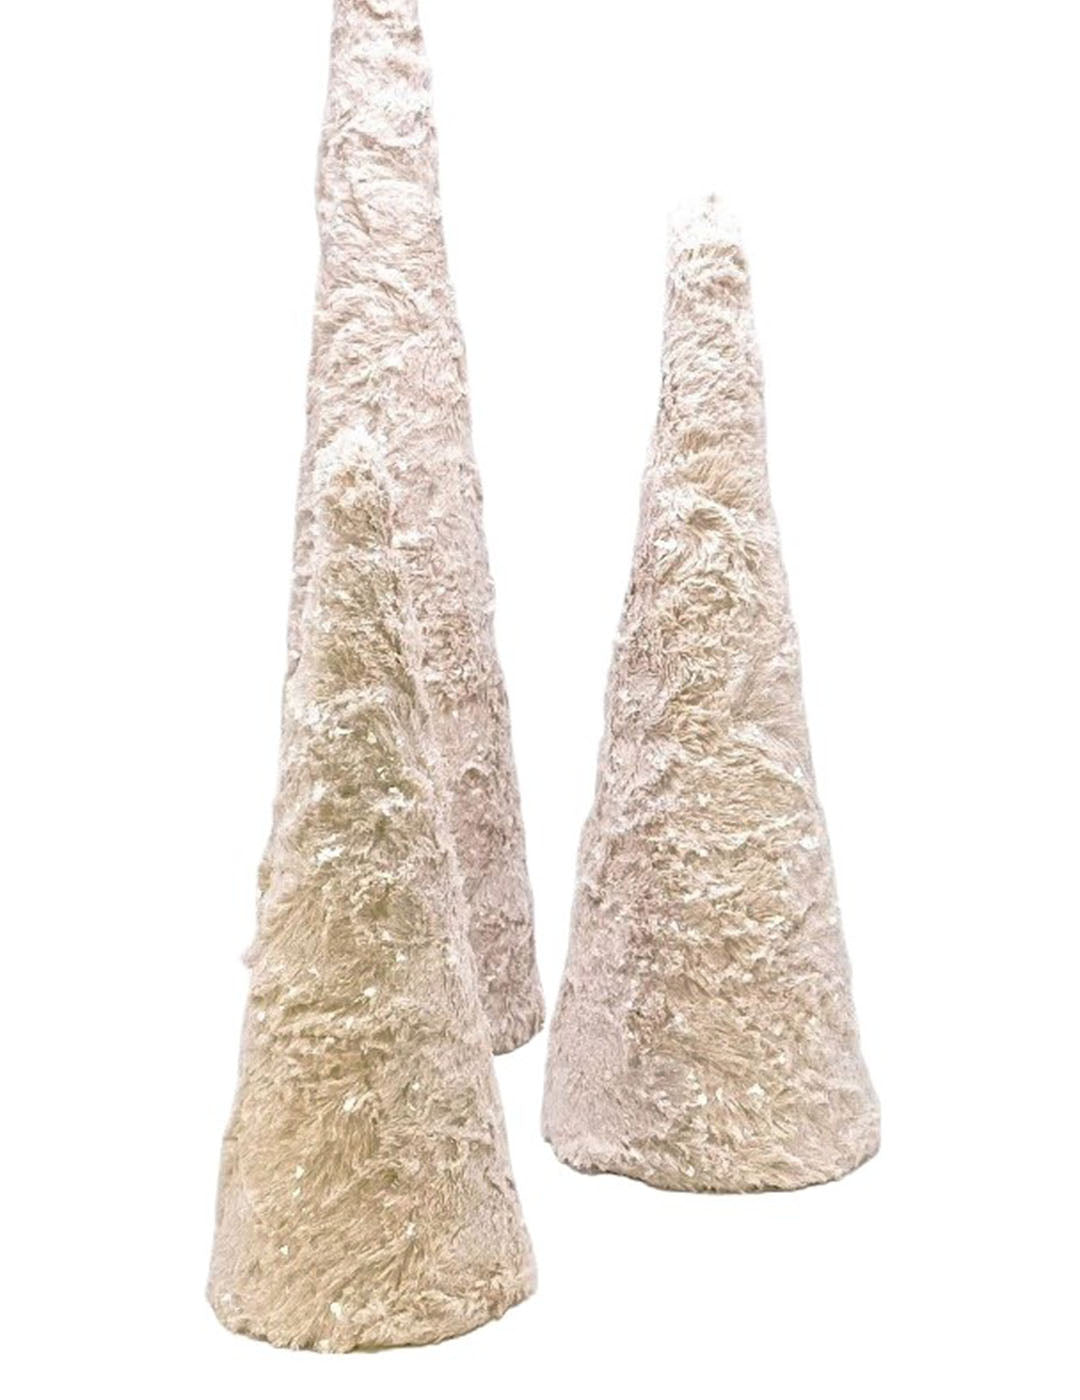 Iced Cone 14.75" Tree - Medium, Latte Fur